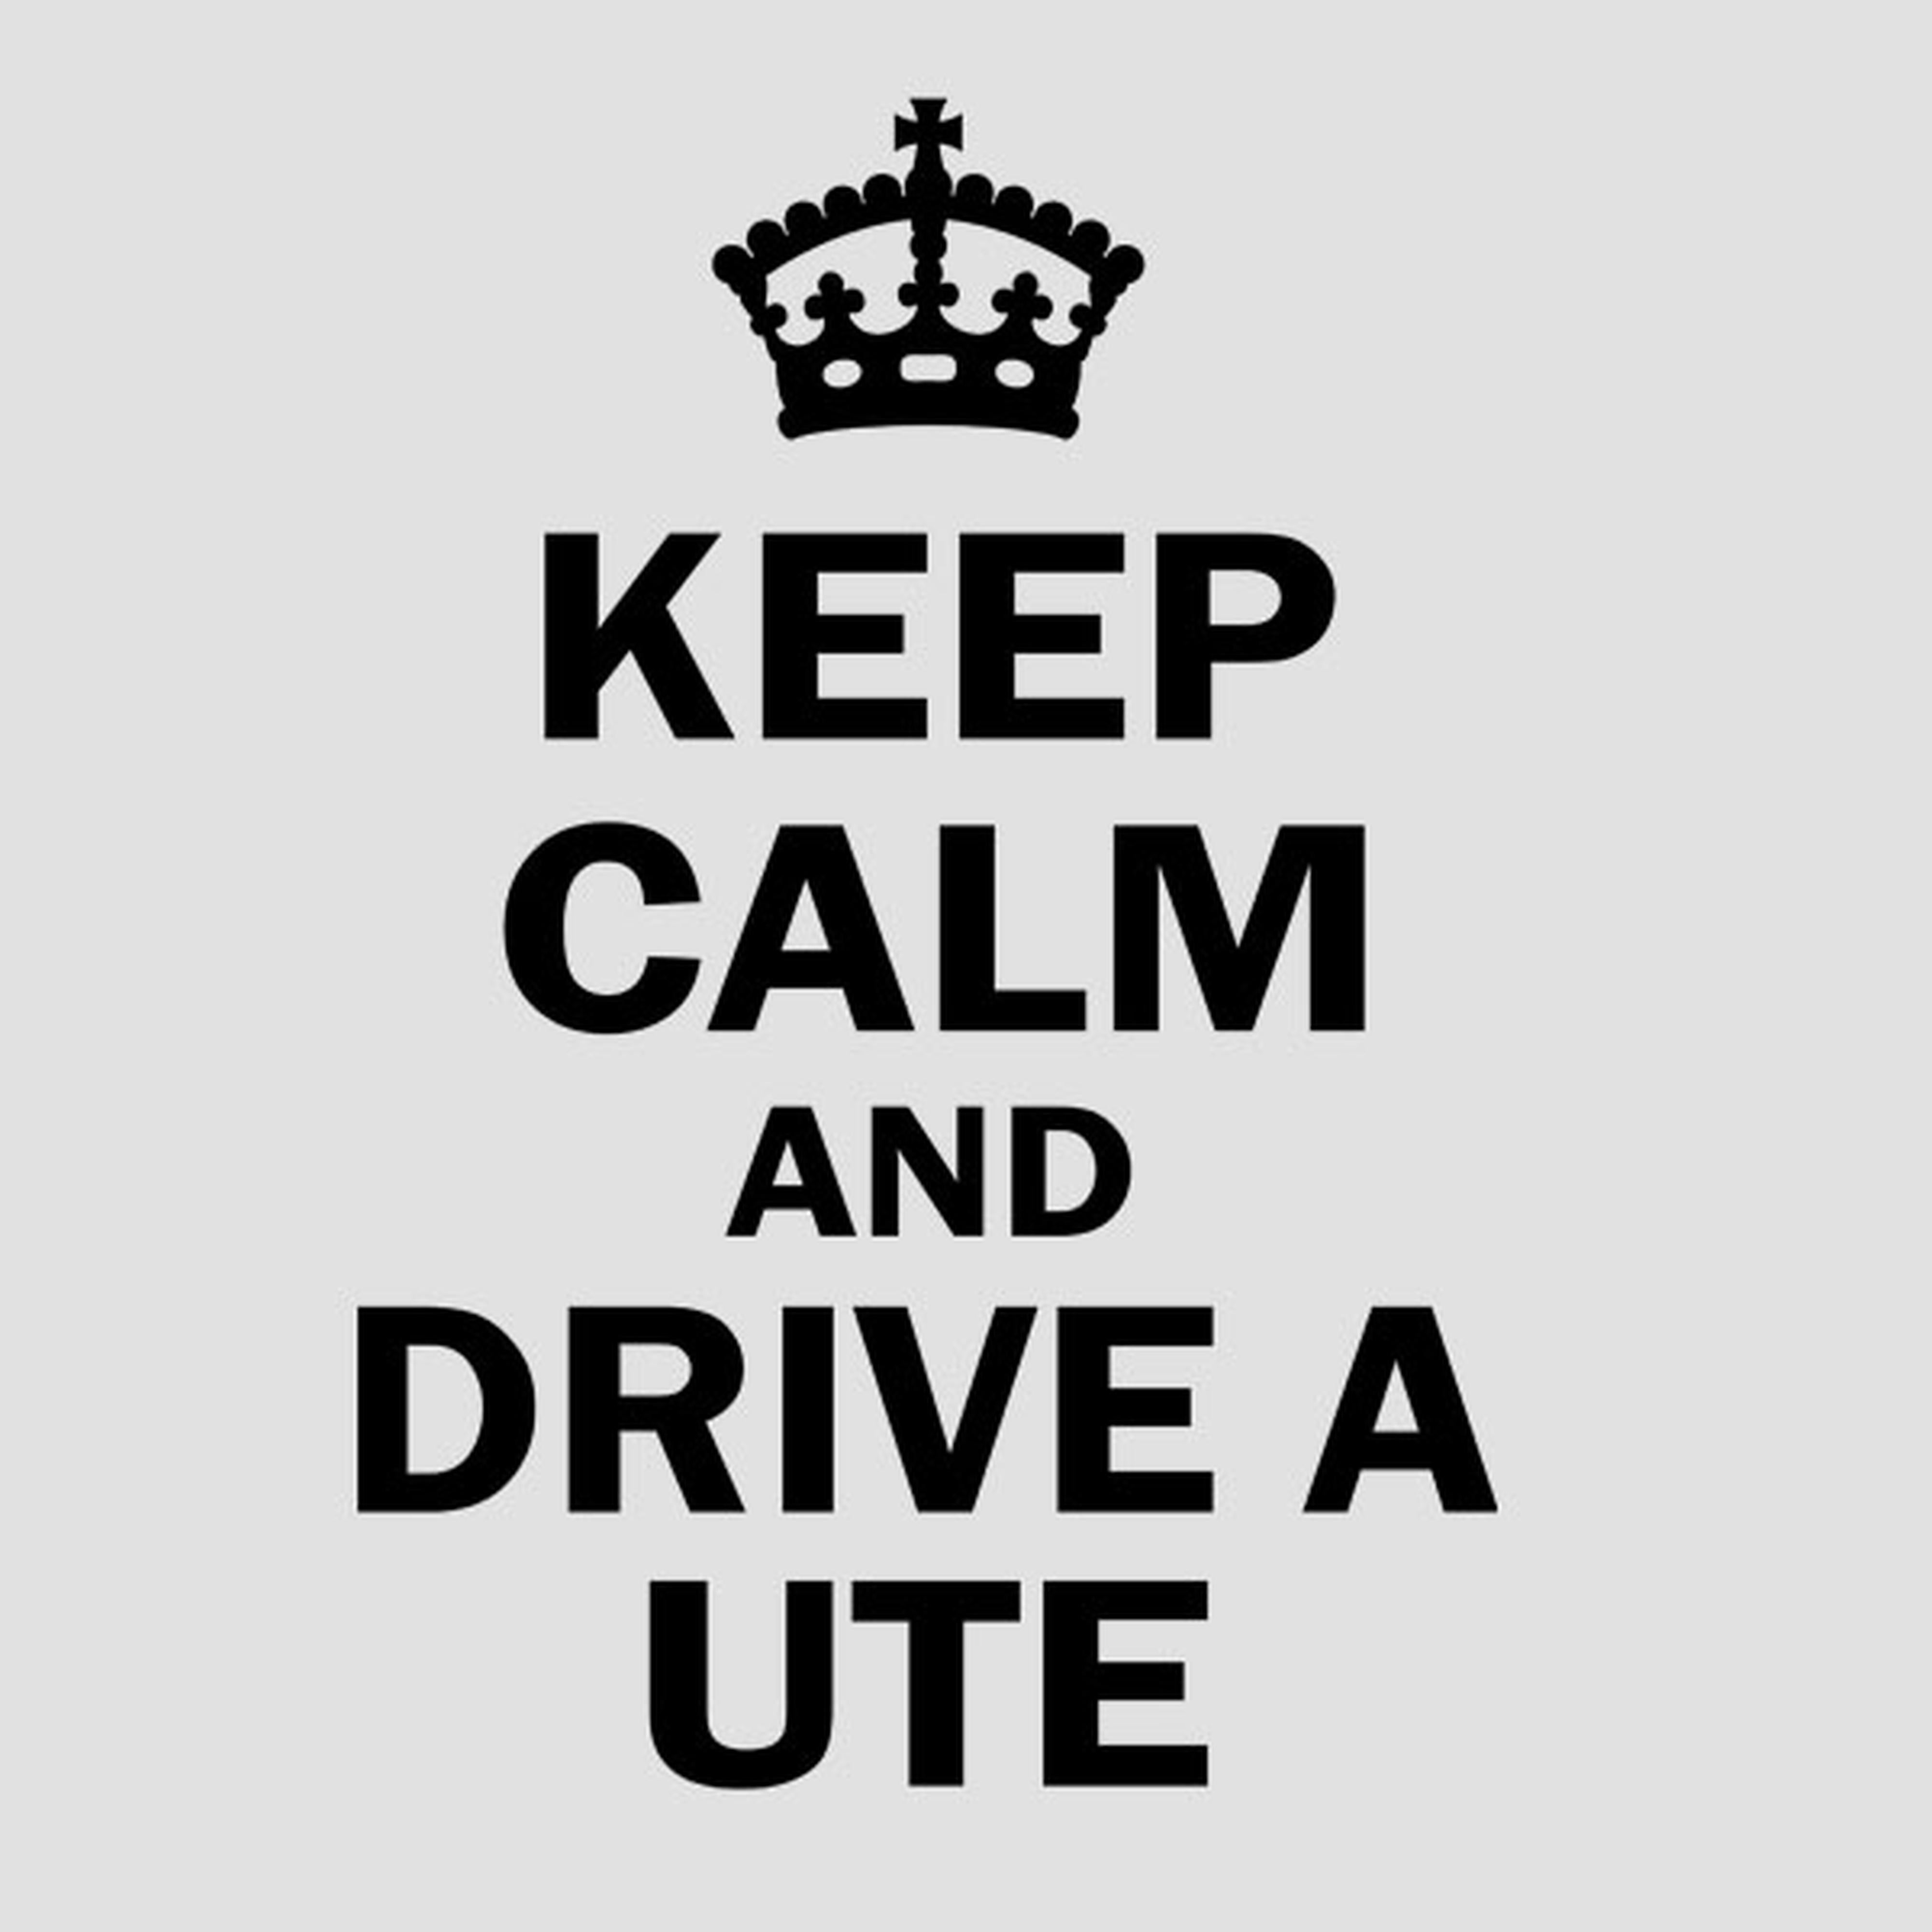 Keep calm and drive a Ute - T-shirt